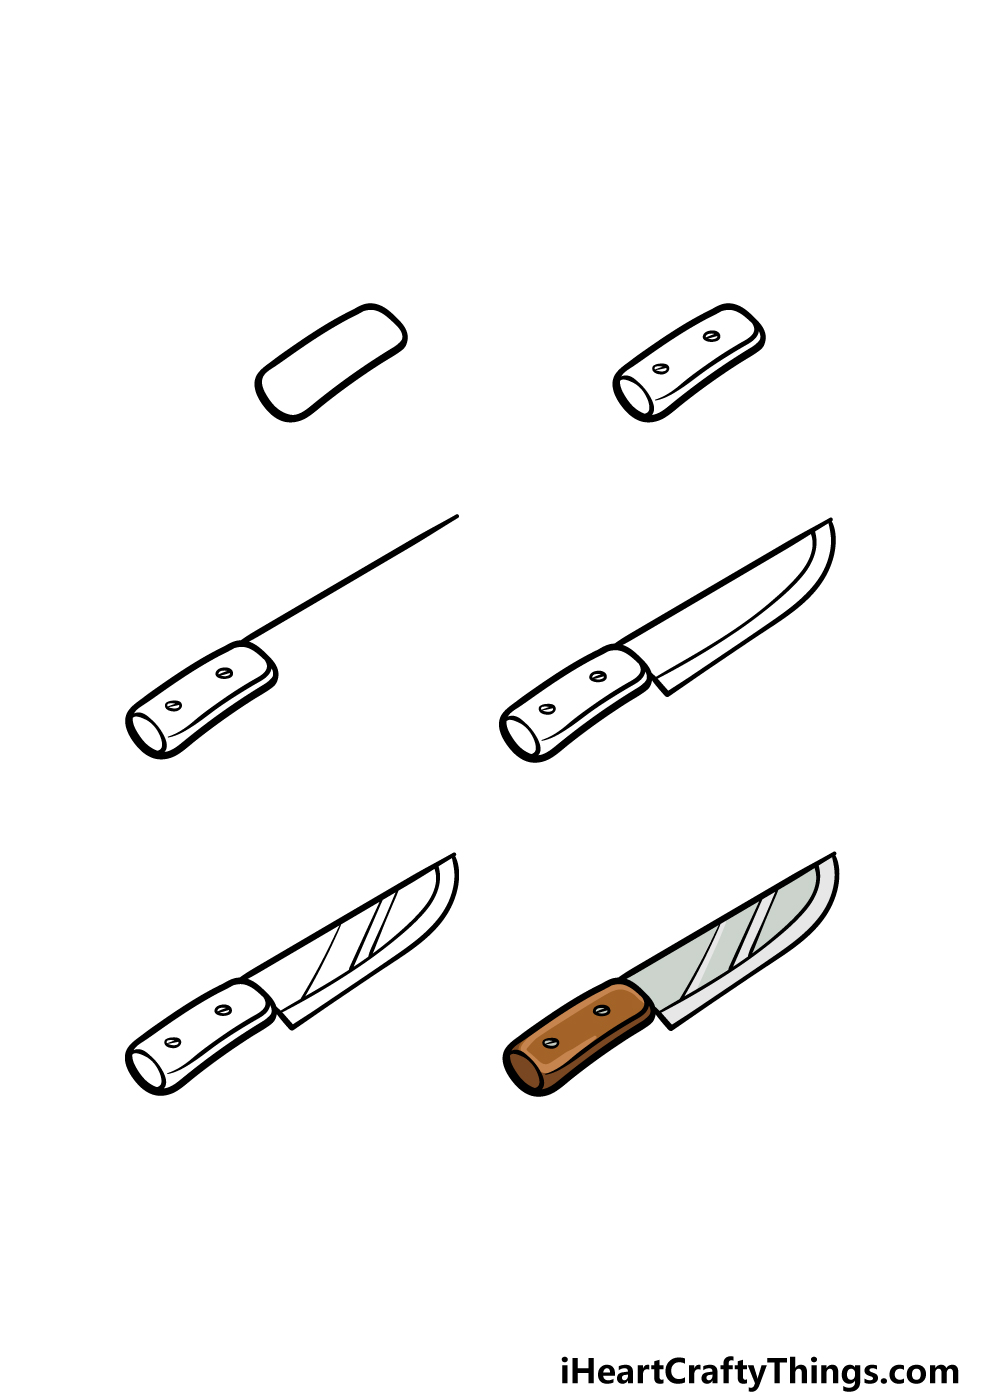 Cartoon Knife Drawing - How To Draw A Cartoon Knife Step By Step